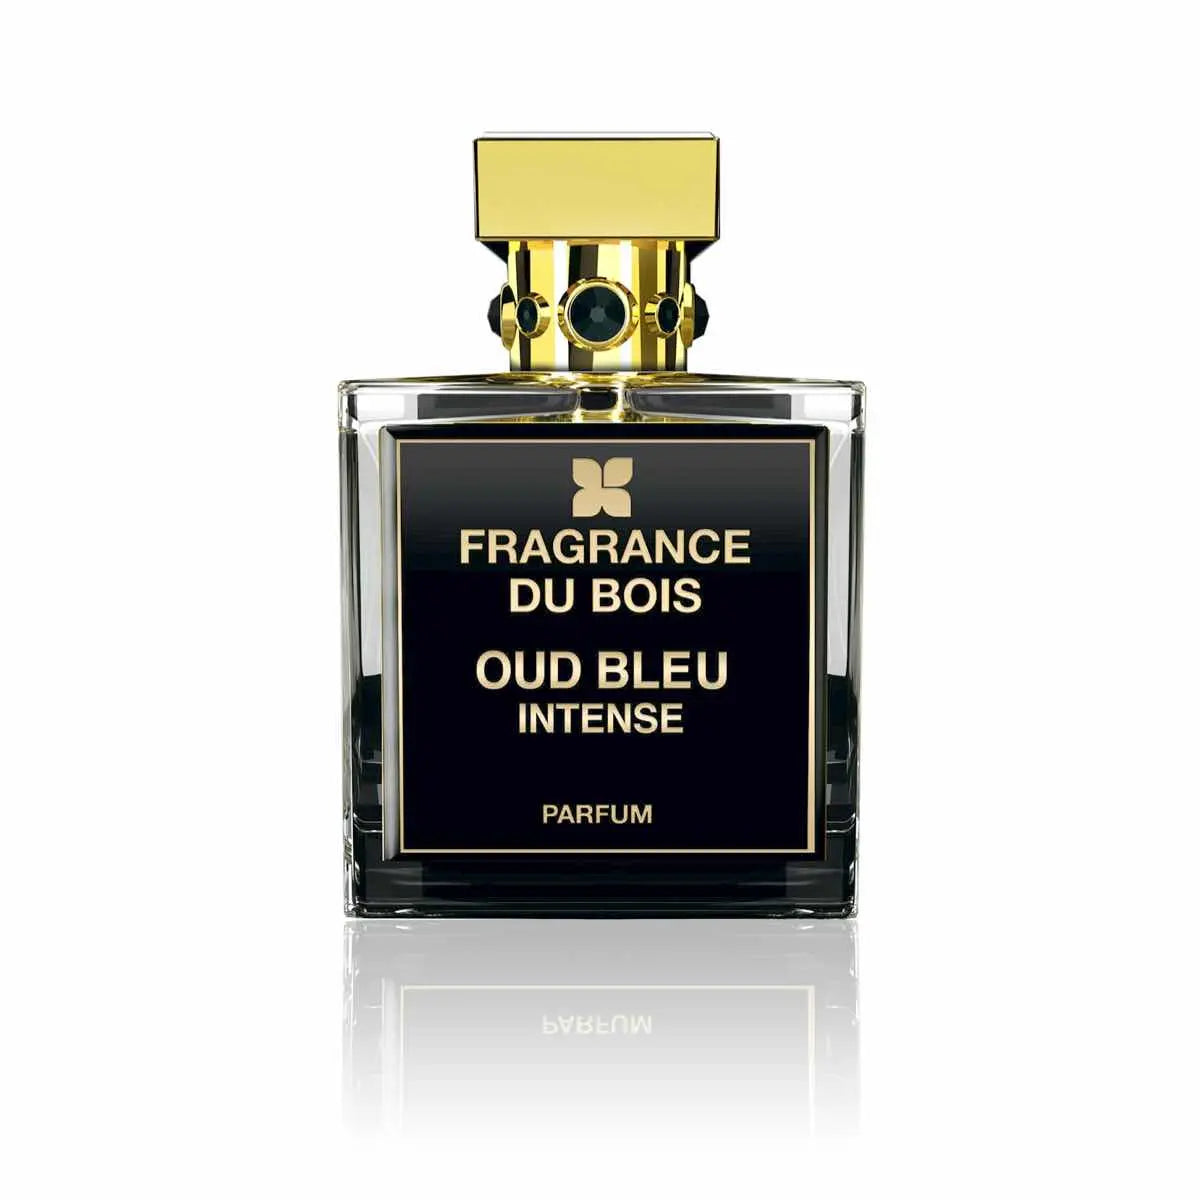 Fragrance du bois Oud Bleu Intense perfume - 50 ml